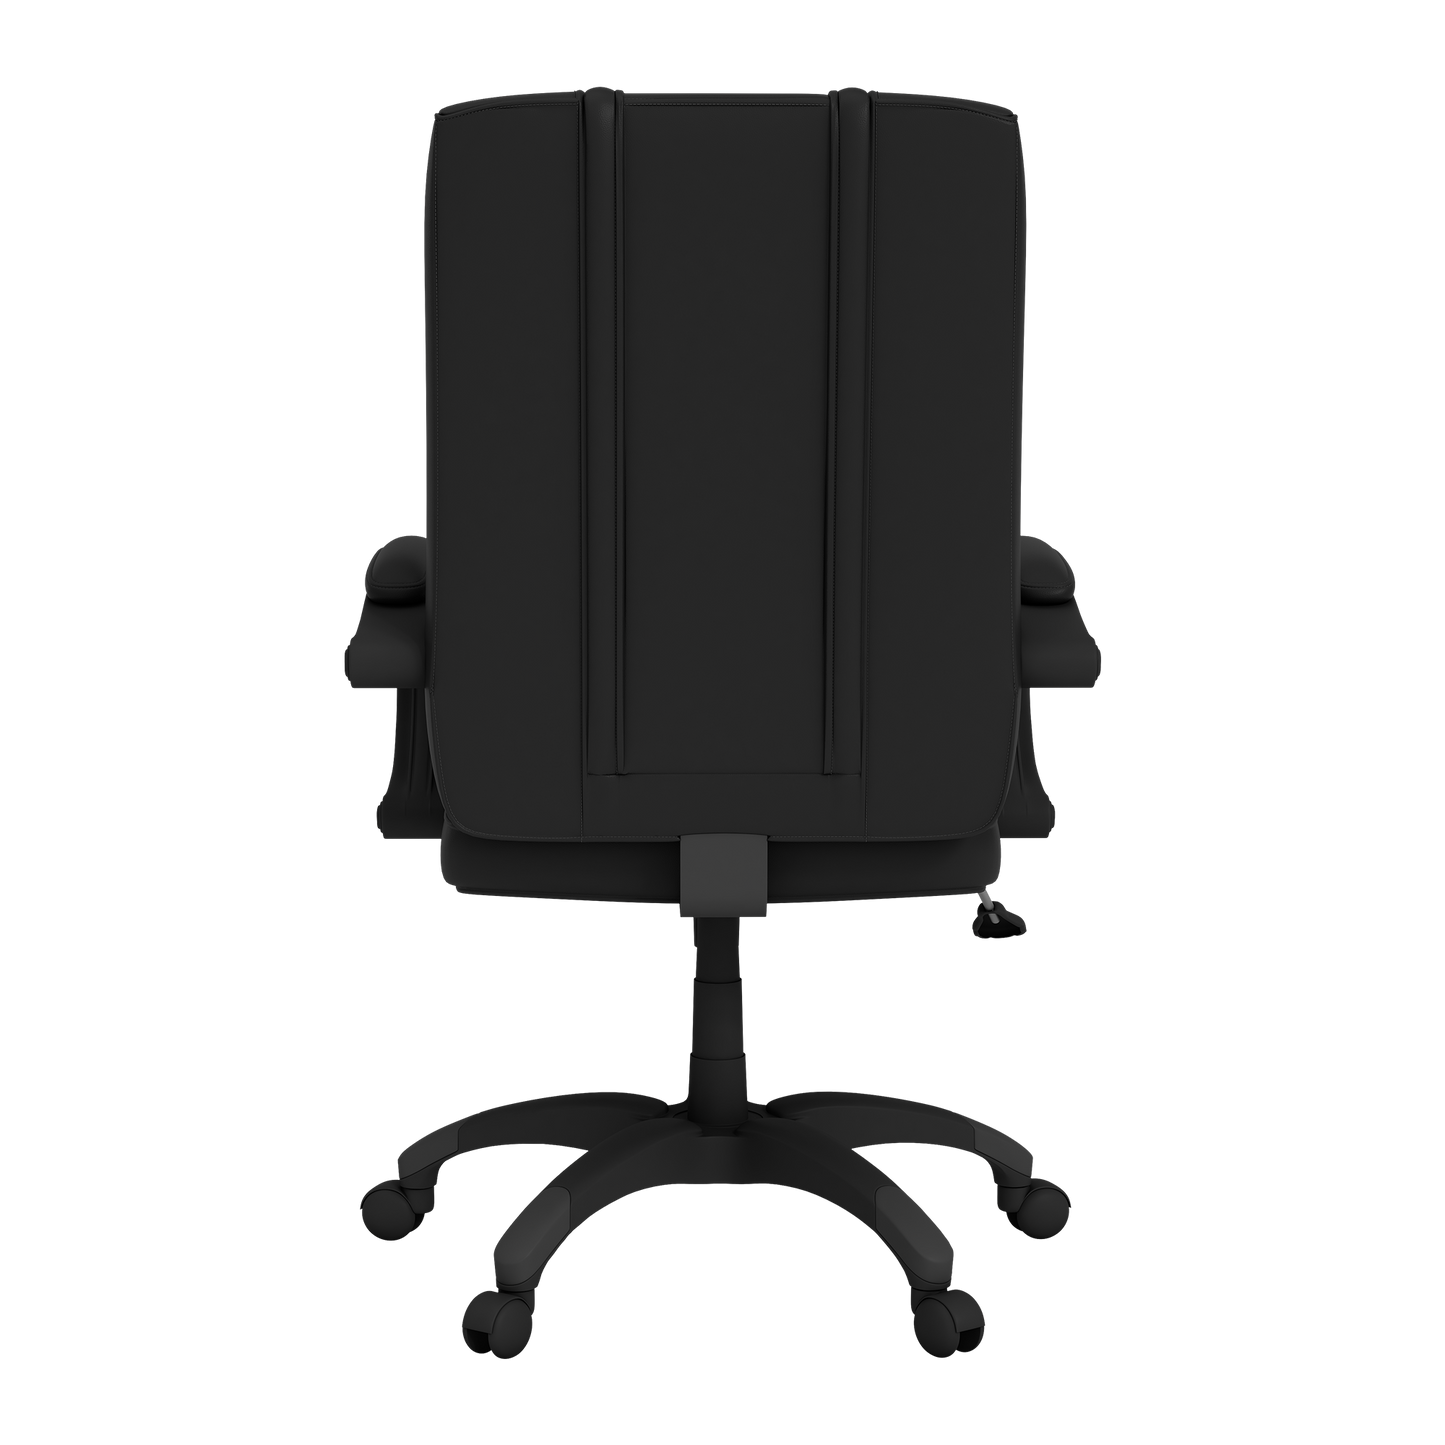 Office Chair 1000 with Orlando Magic Logo